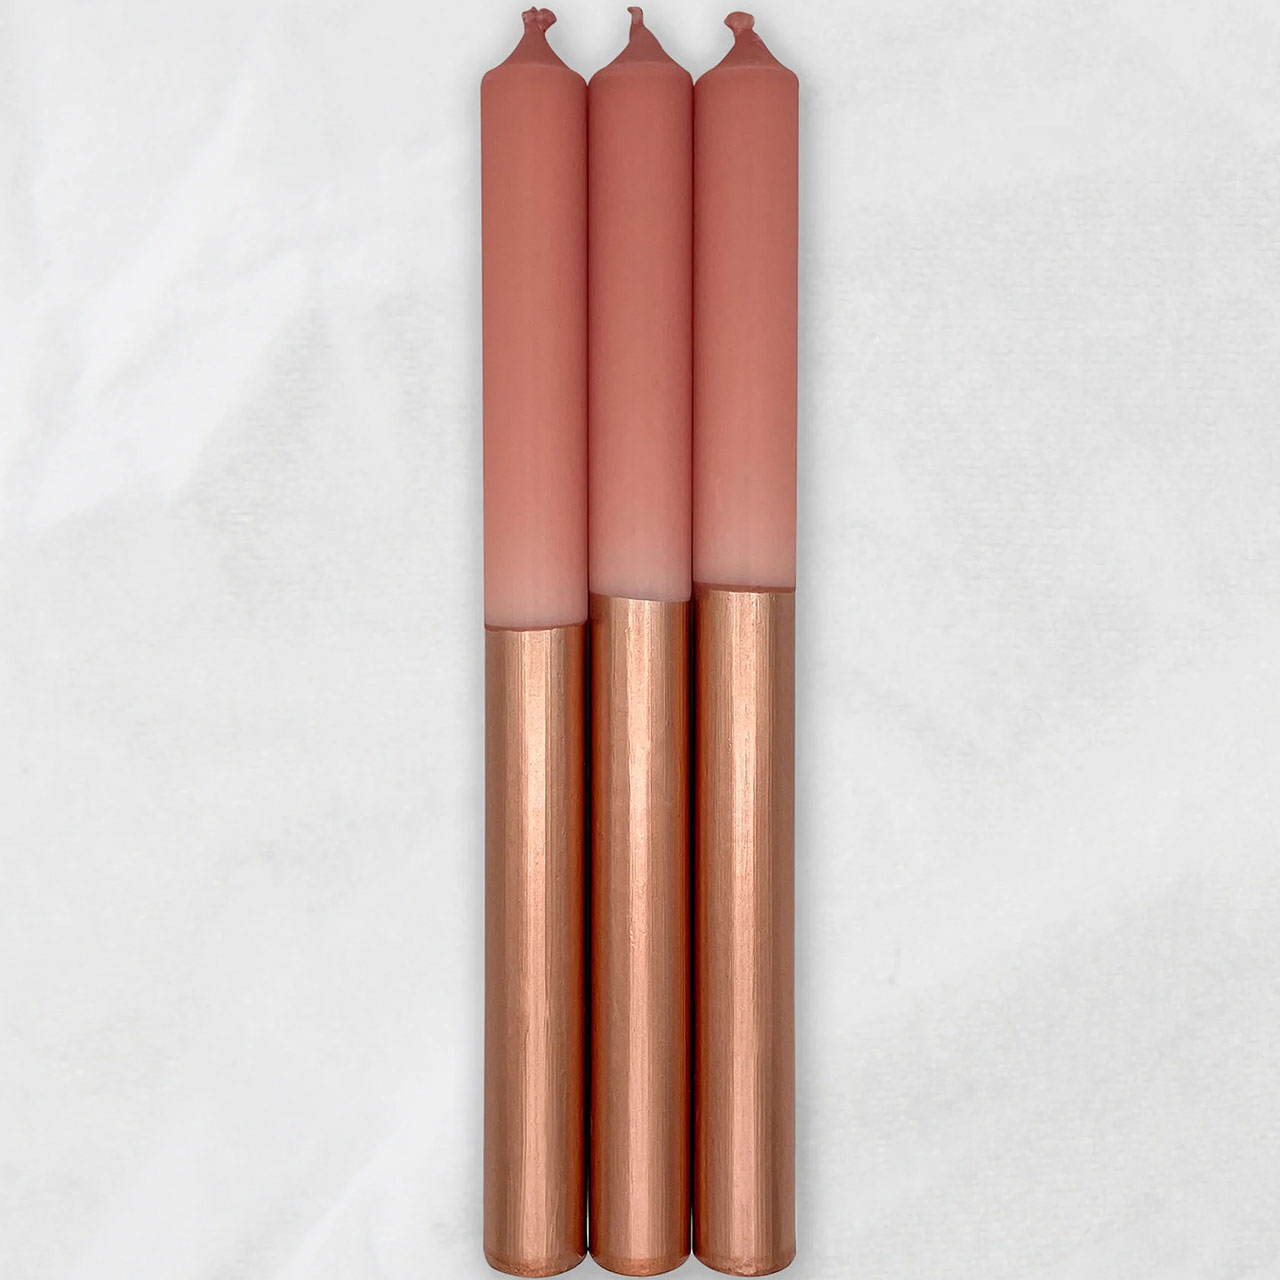 Decorative Candles - Copper & Blush